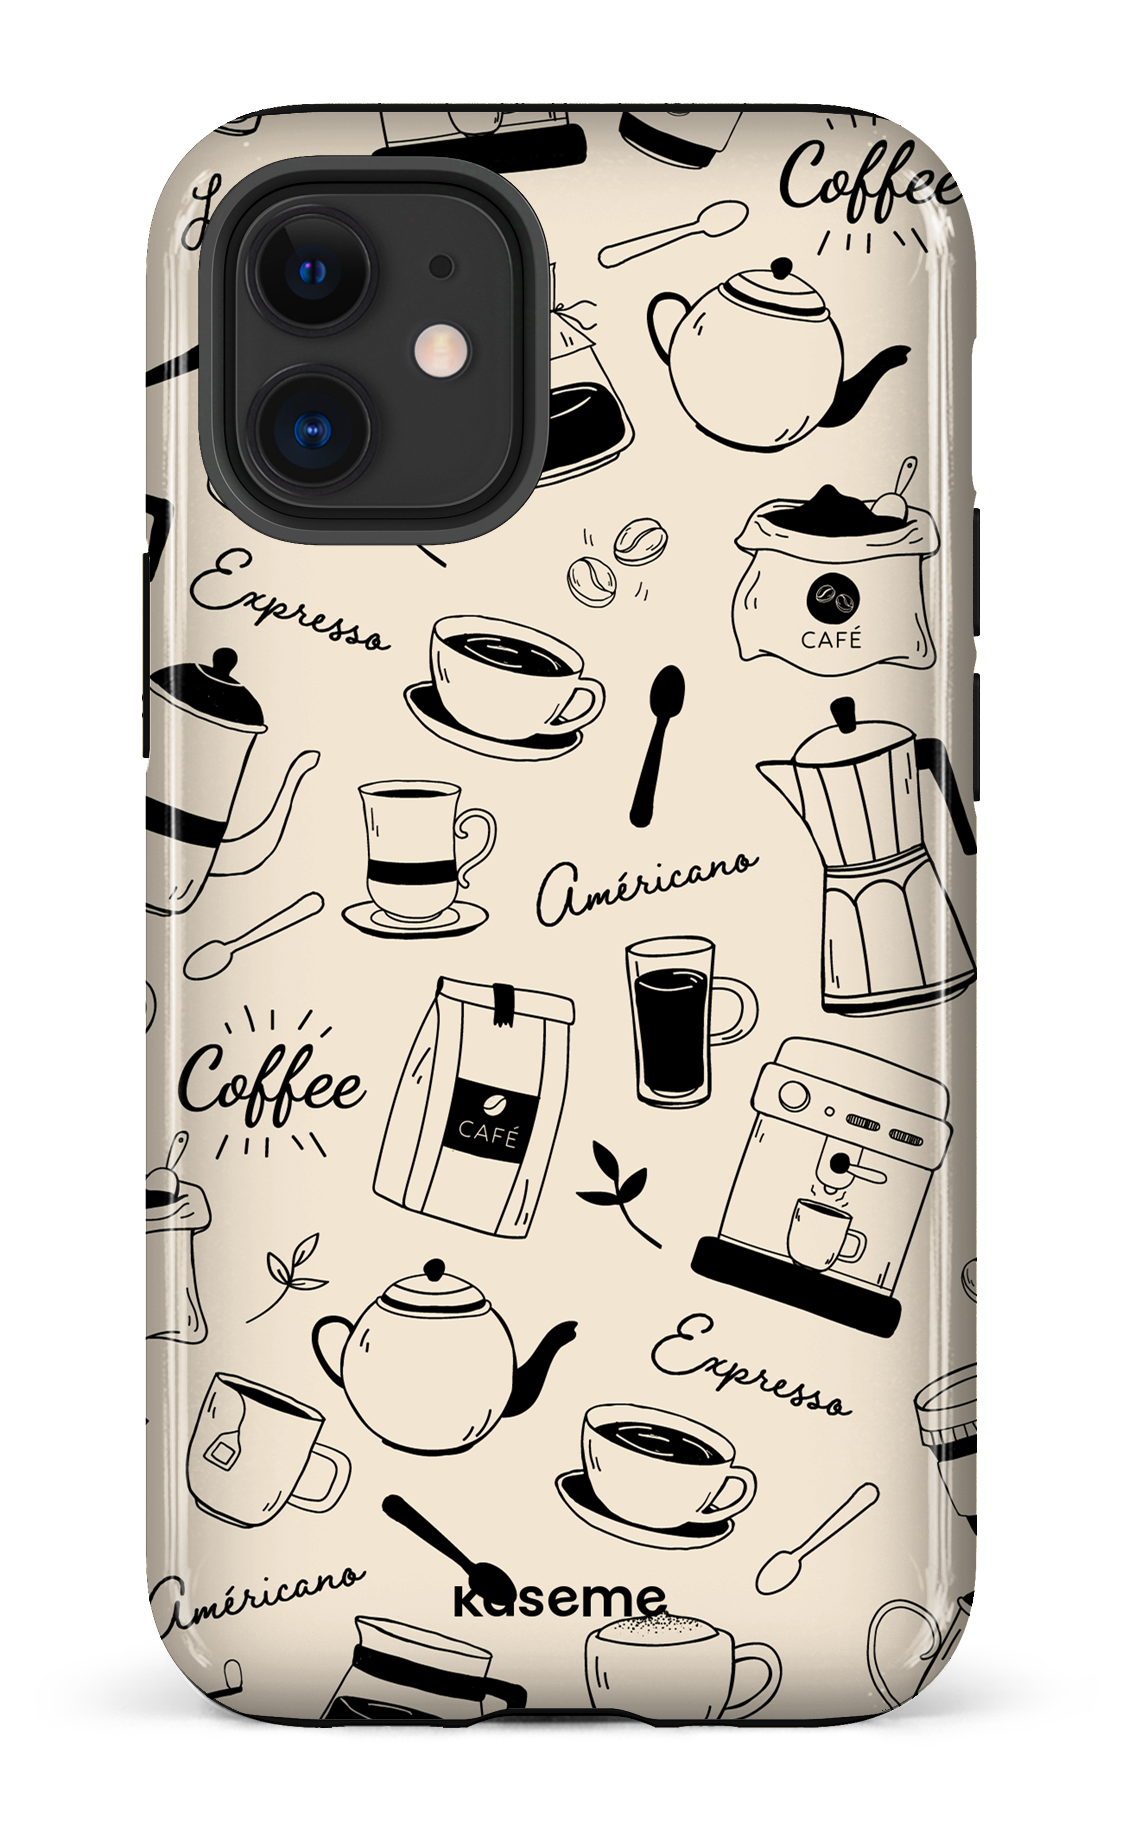 Espresso - iPhone 12 Mini